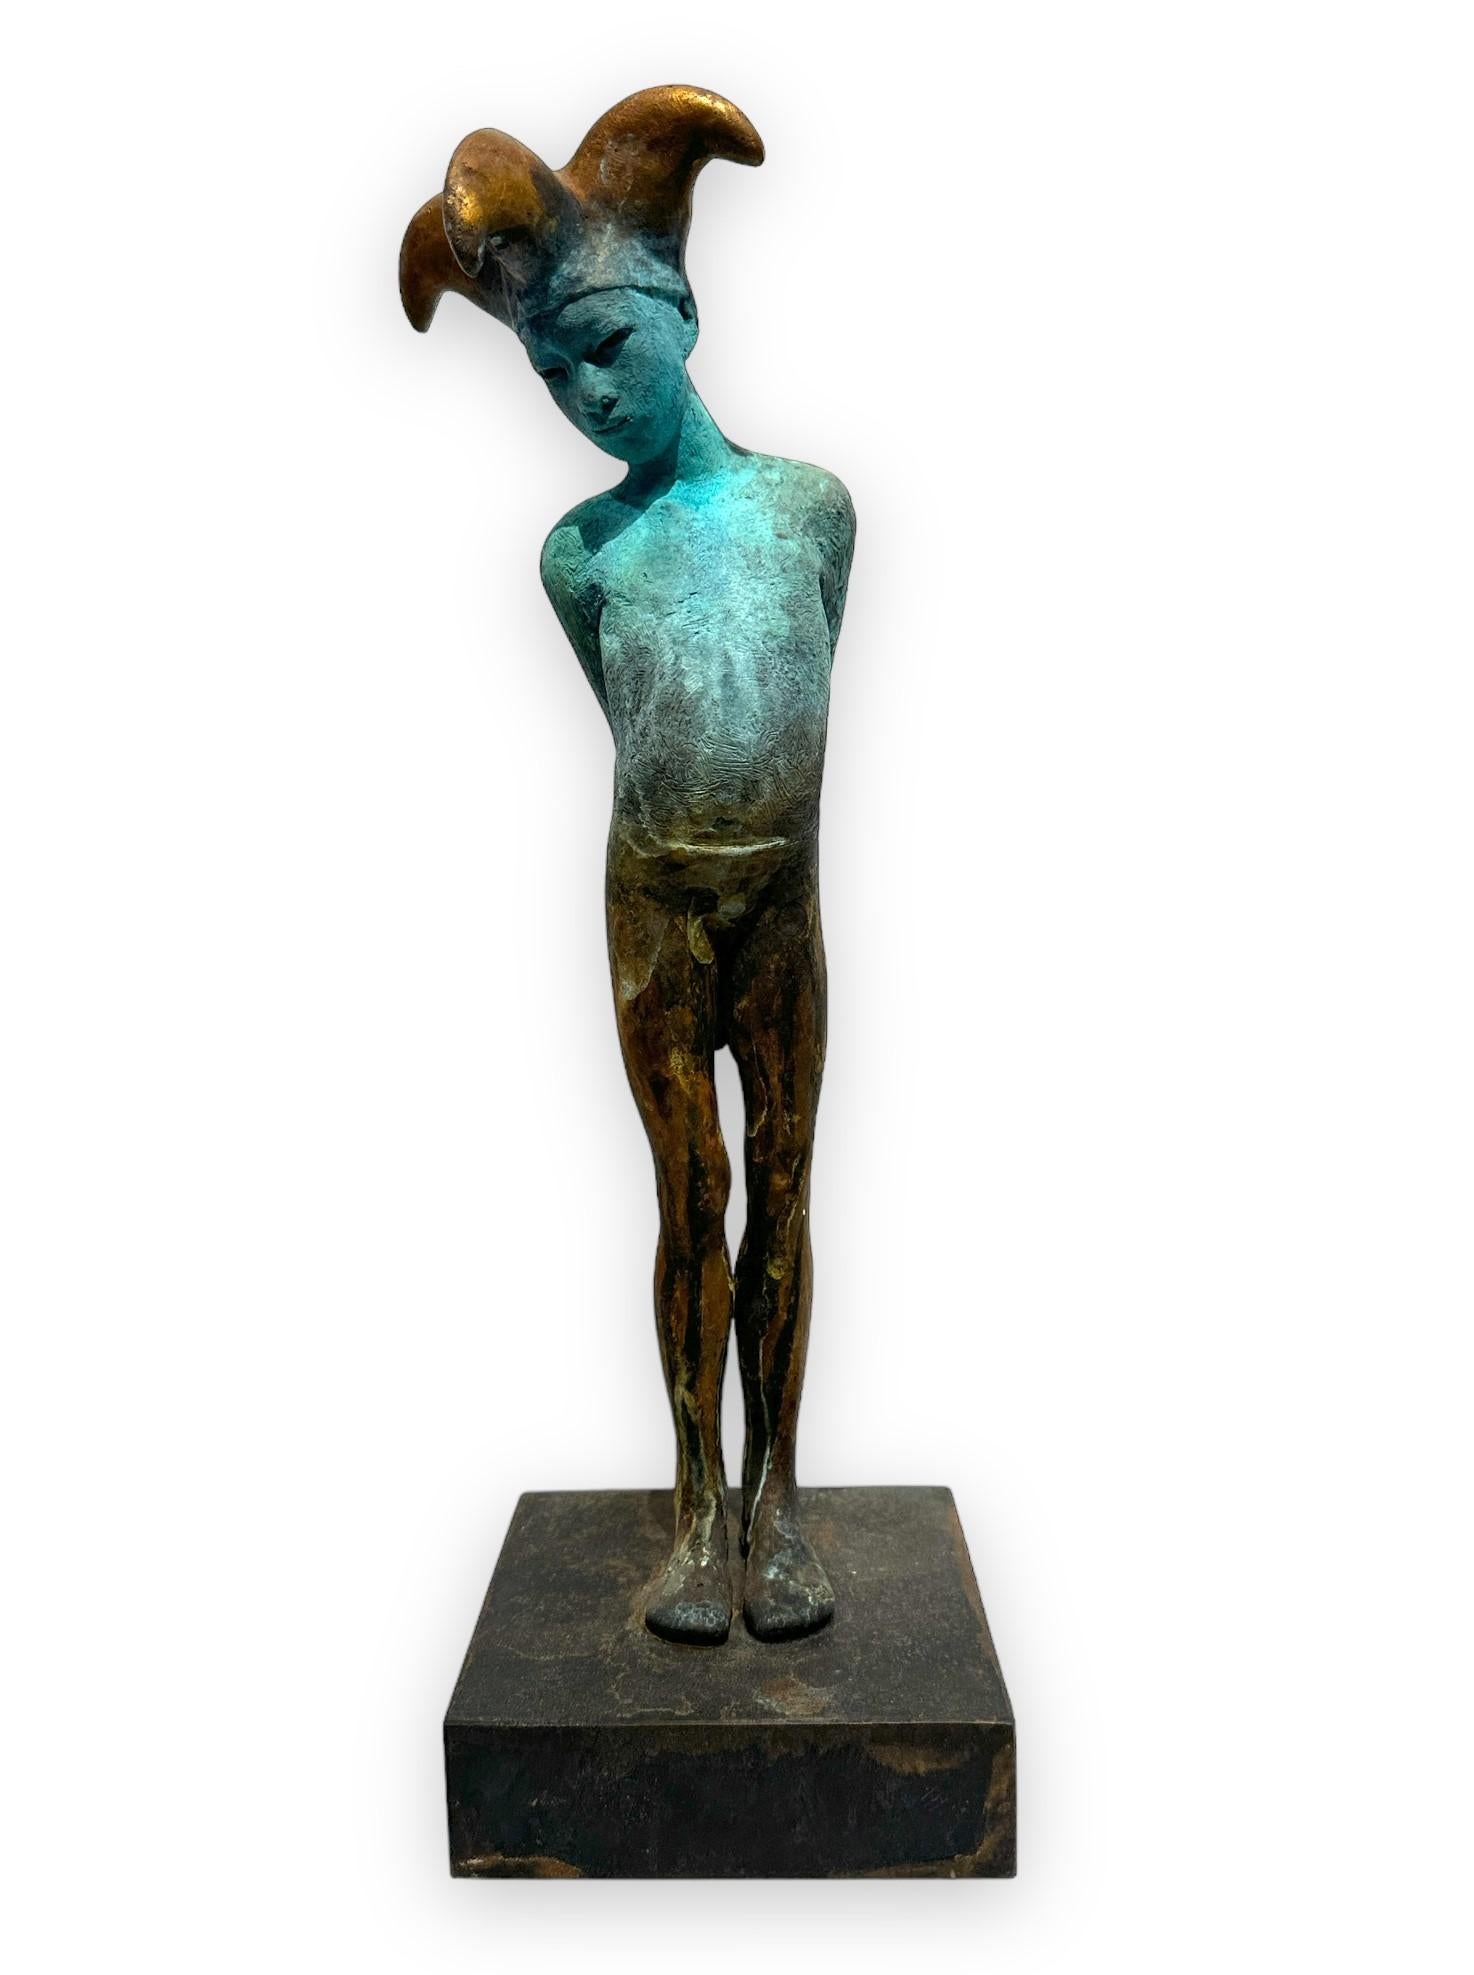 Jesus Curia Perez Figurative Sculpture - Arlequin IV - Bronze Commedia dell'Arte Sculpture, Jester with Hands Held Back